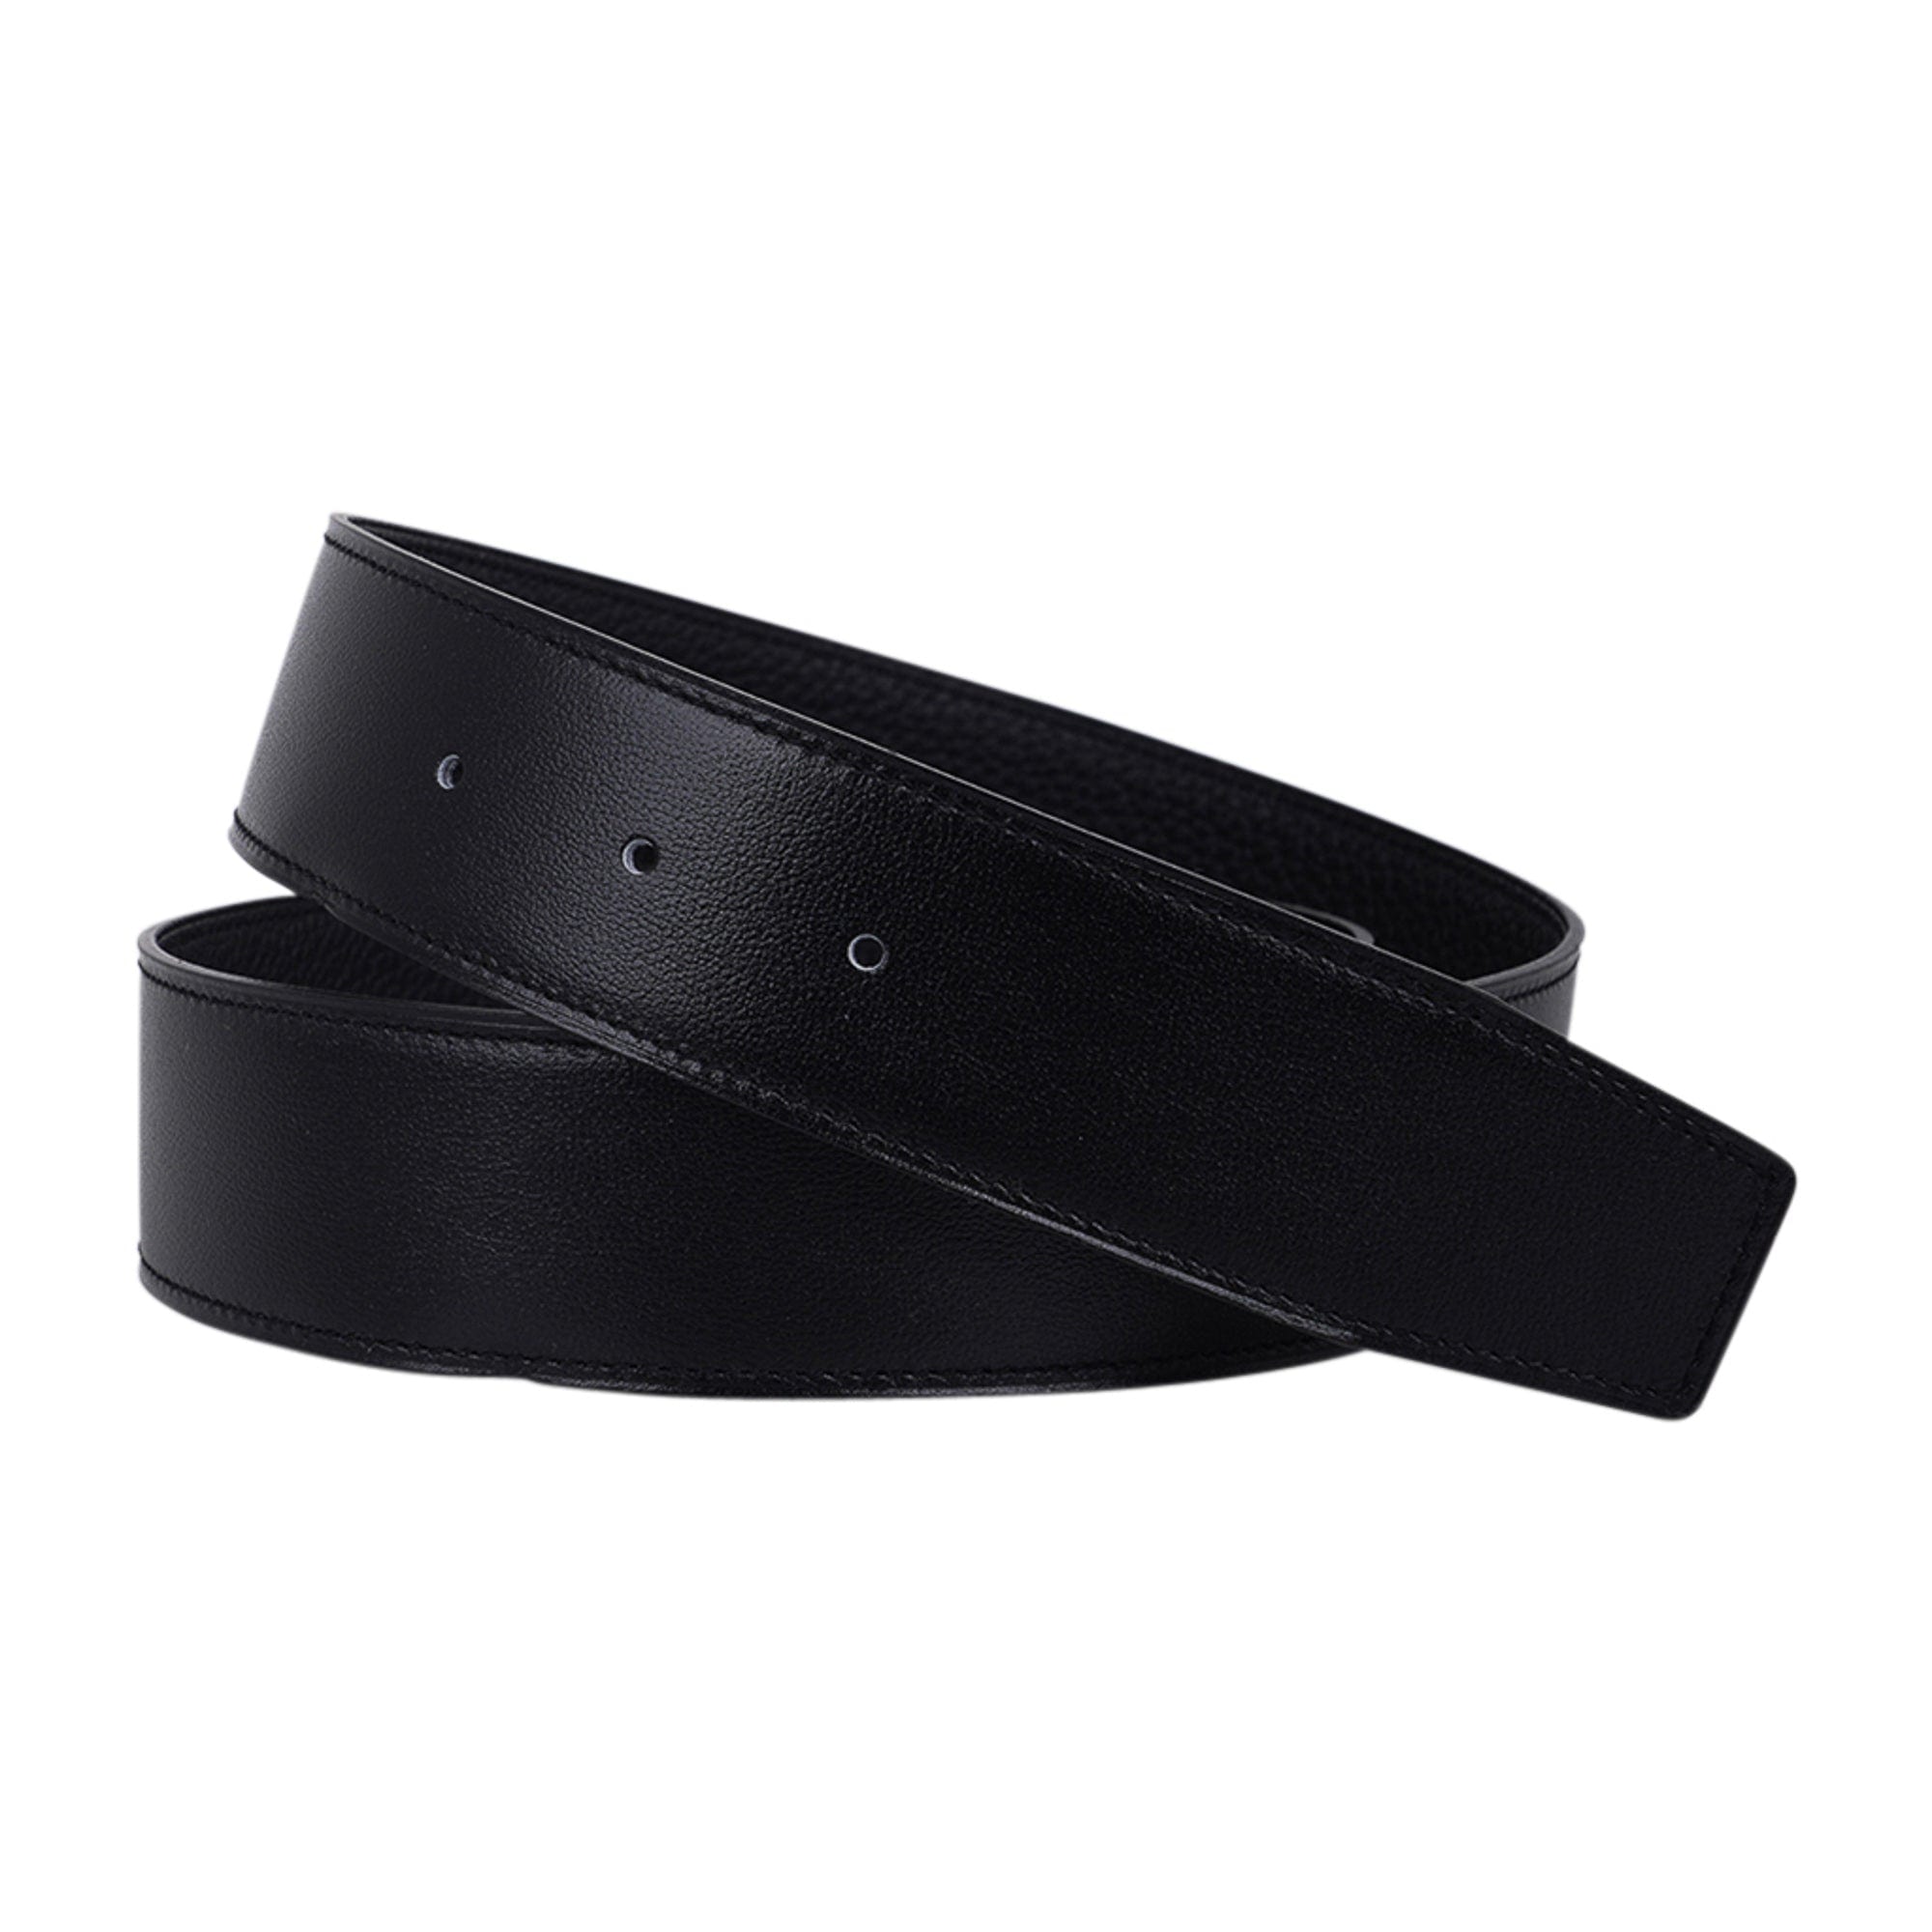 Signature leather belt Louis Vuitton Black size 85 cm in Leather